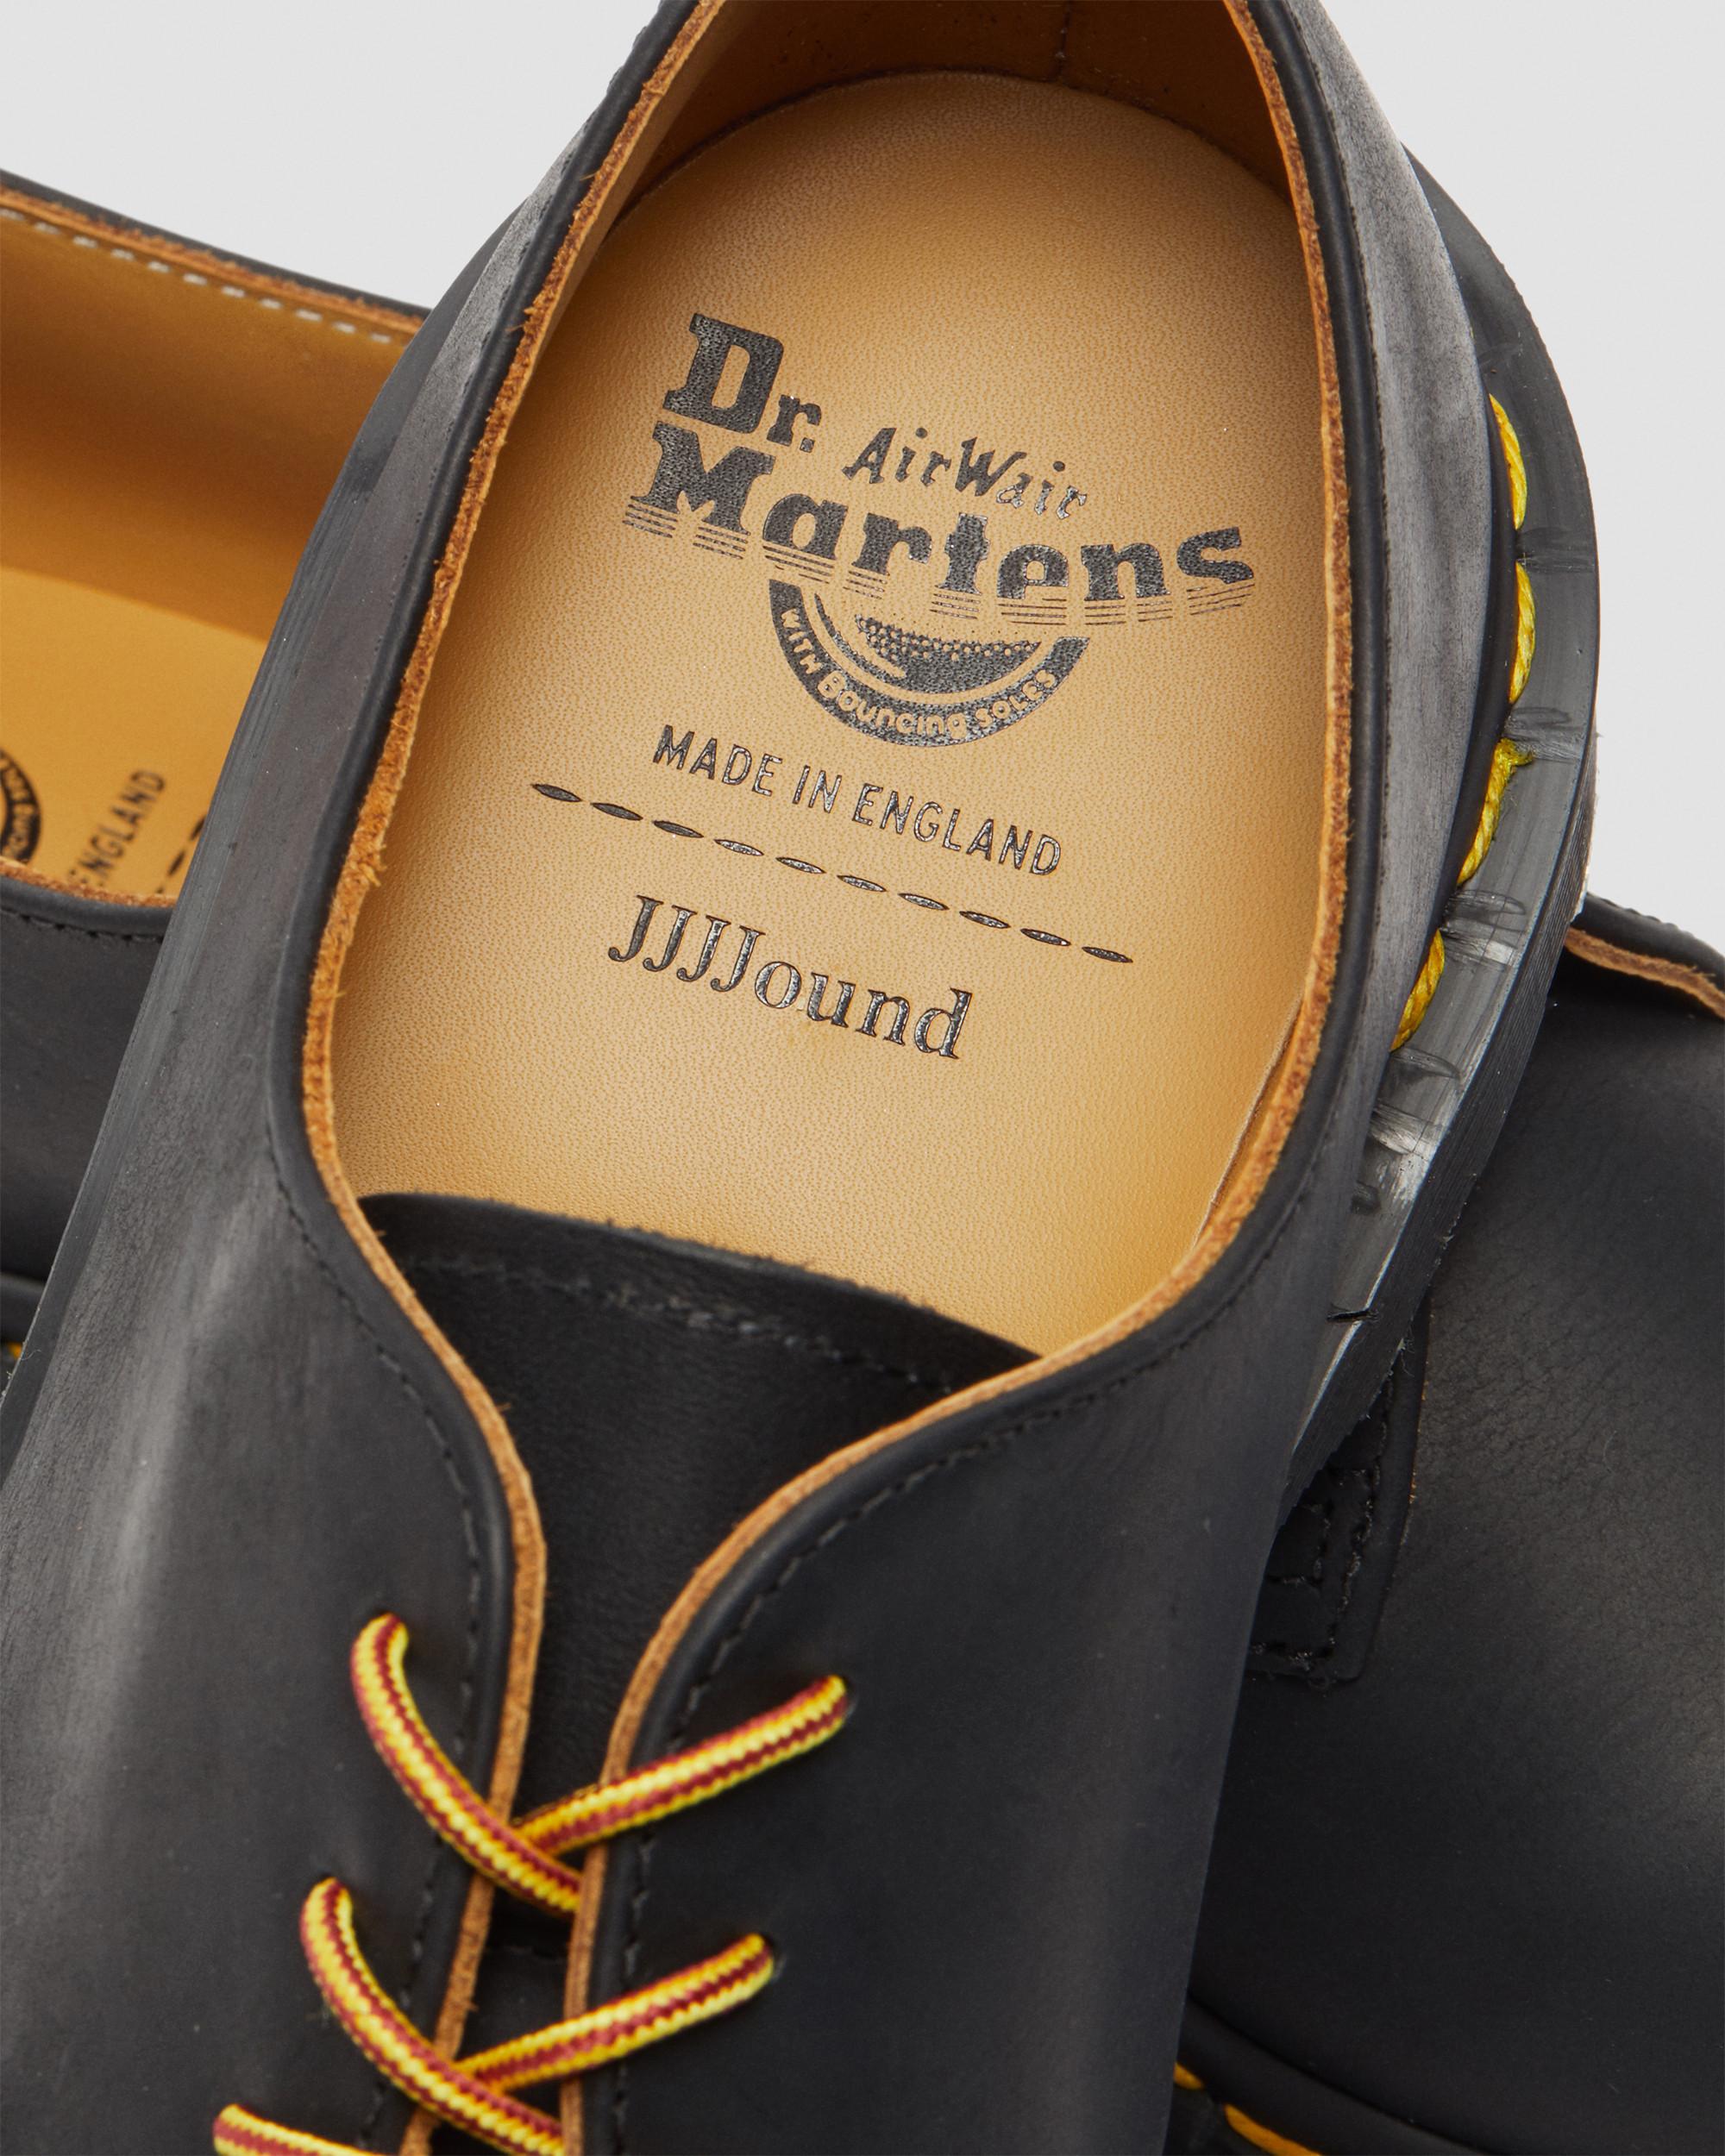 https://i1.adis.ws/i/drmartens/27207001.88.jpg?$large$JJJJOUND ARCHIE II Wyoming Leather Shoes Dr. Martens